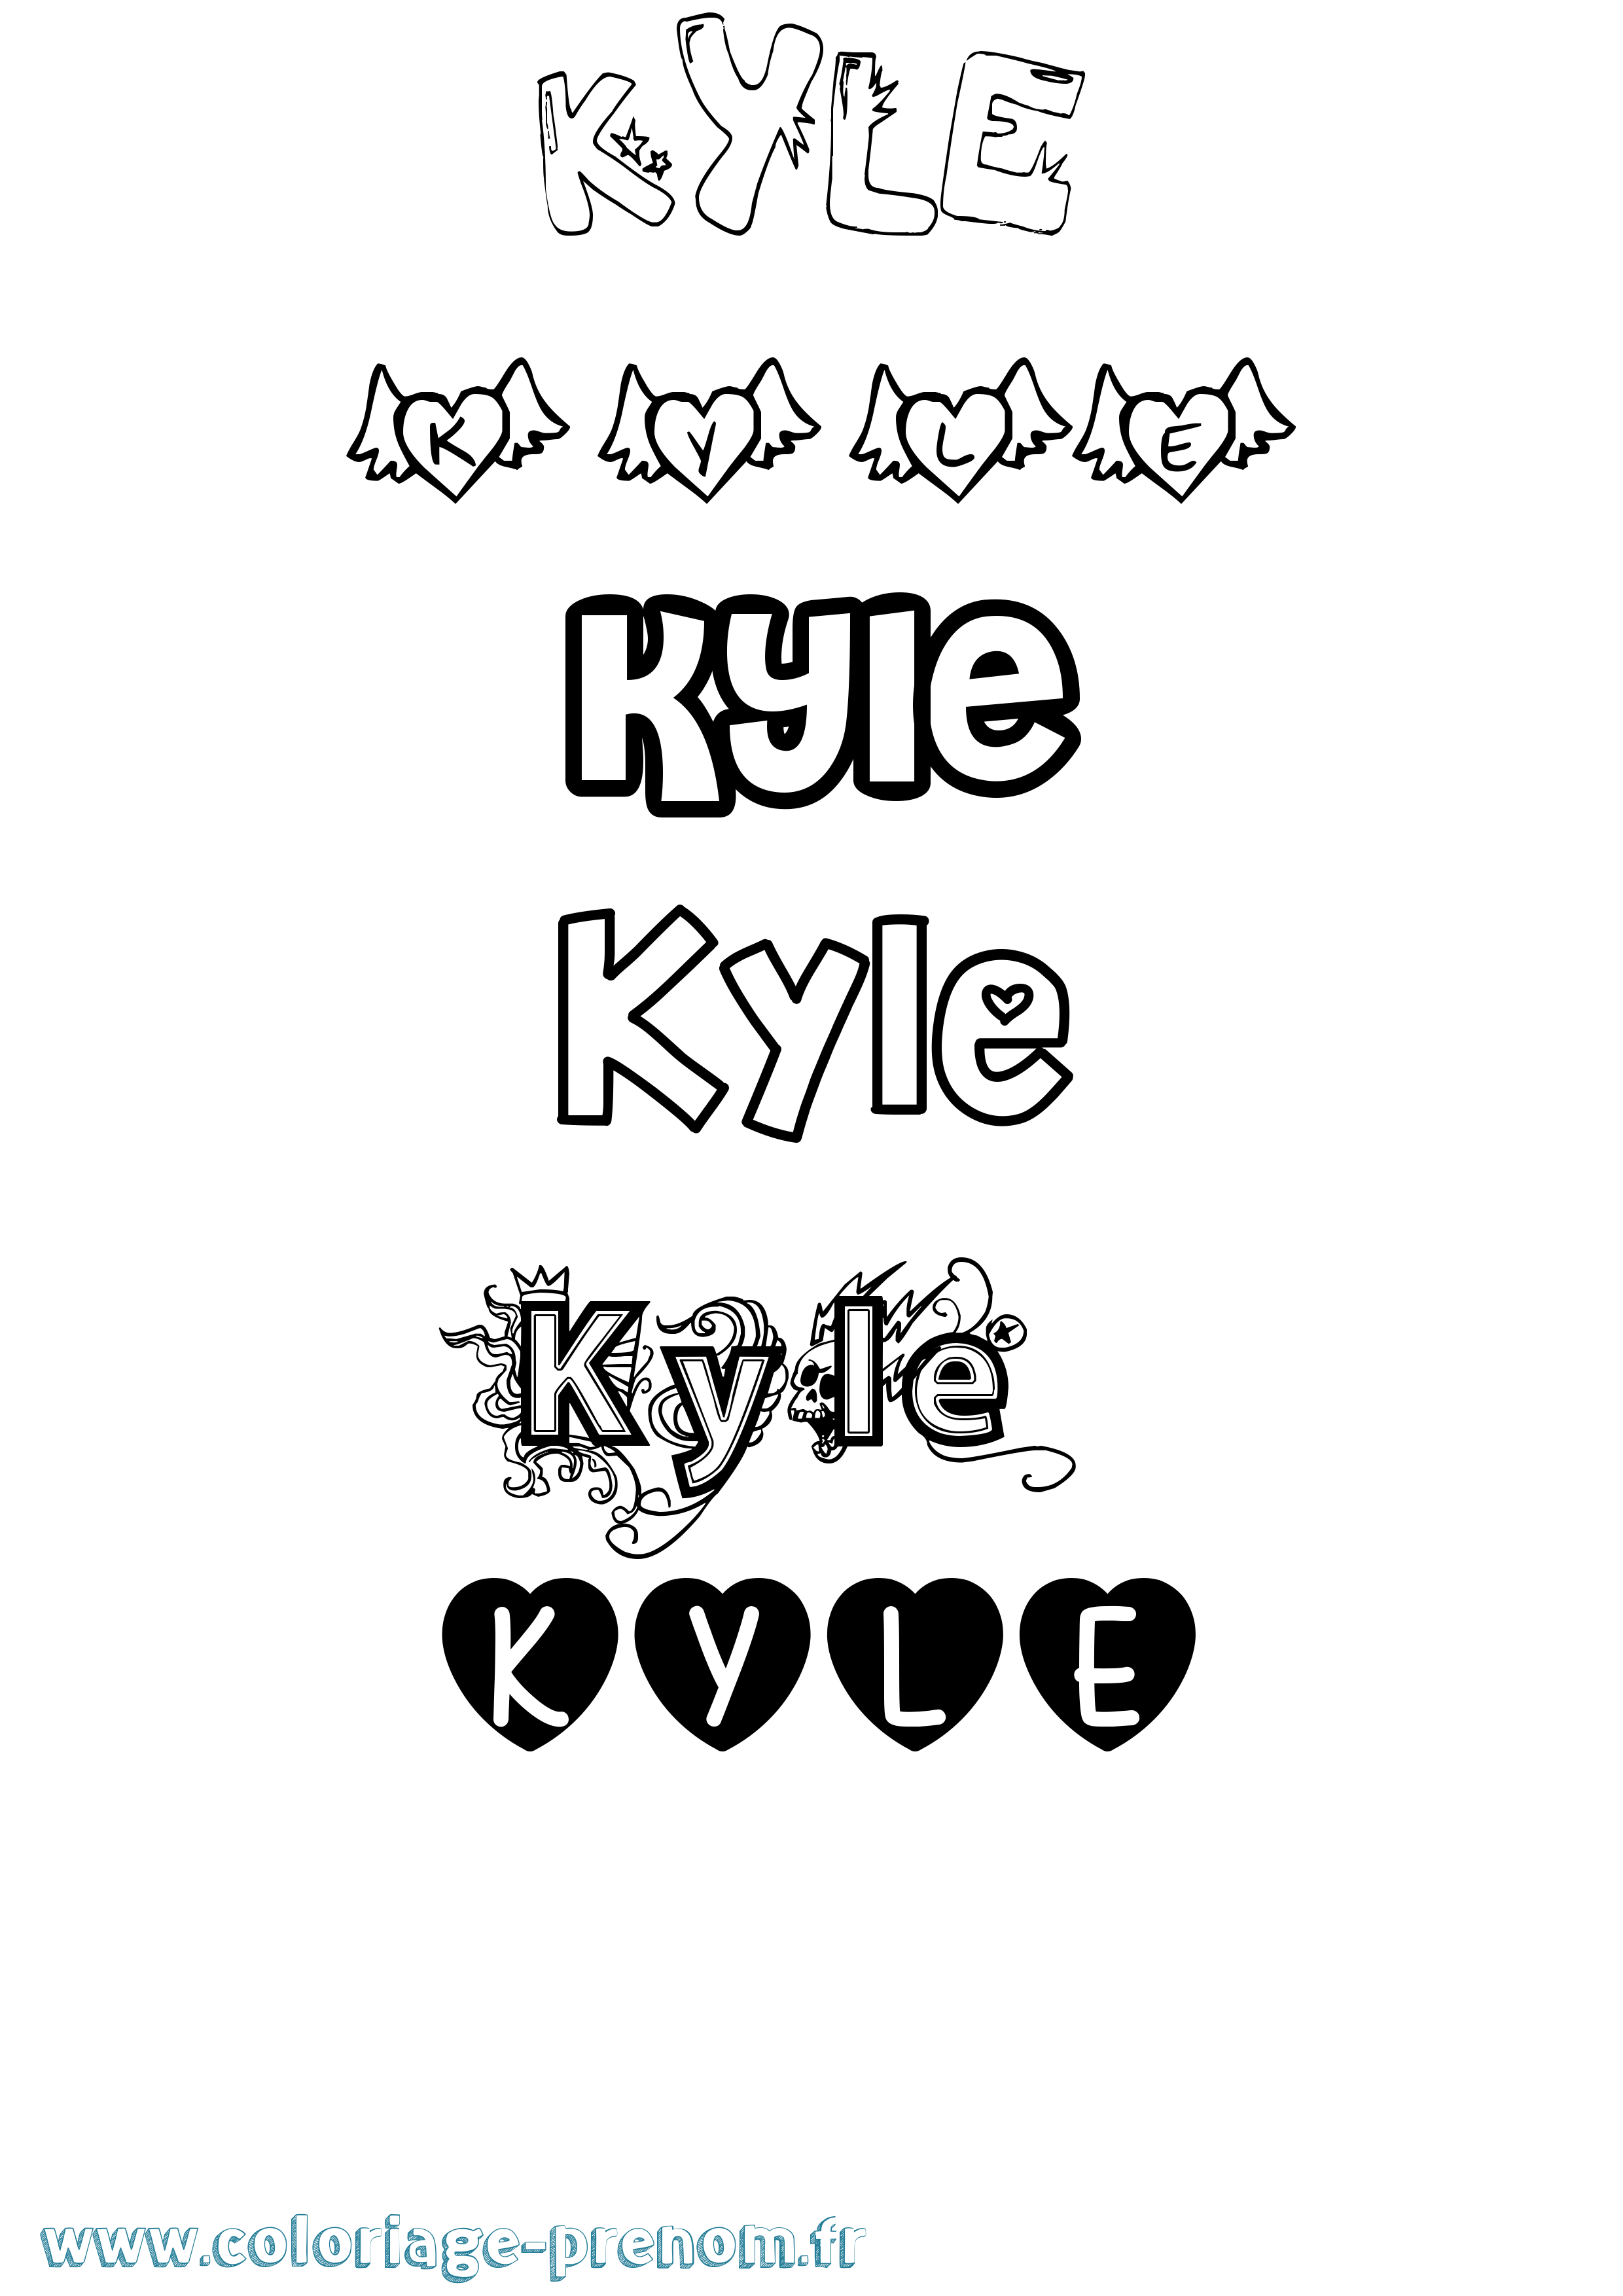 Coloriage prénom Kyle